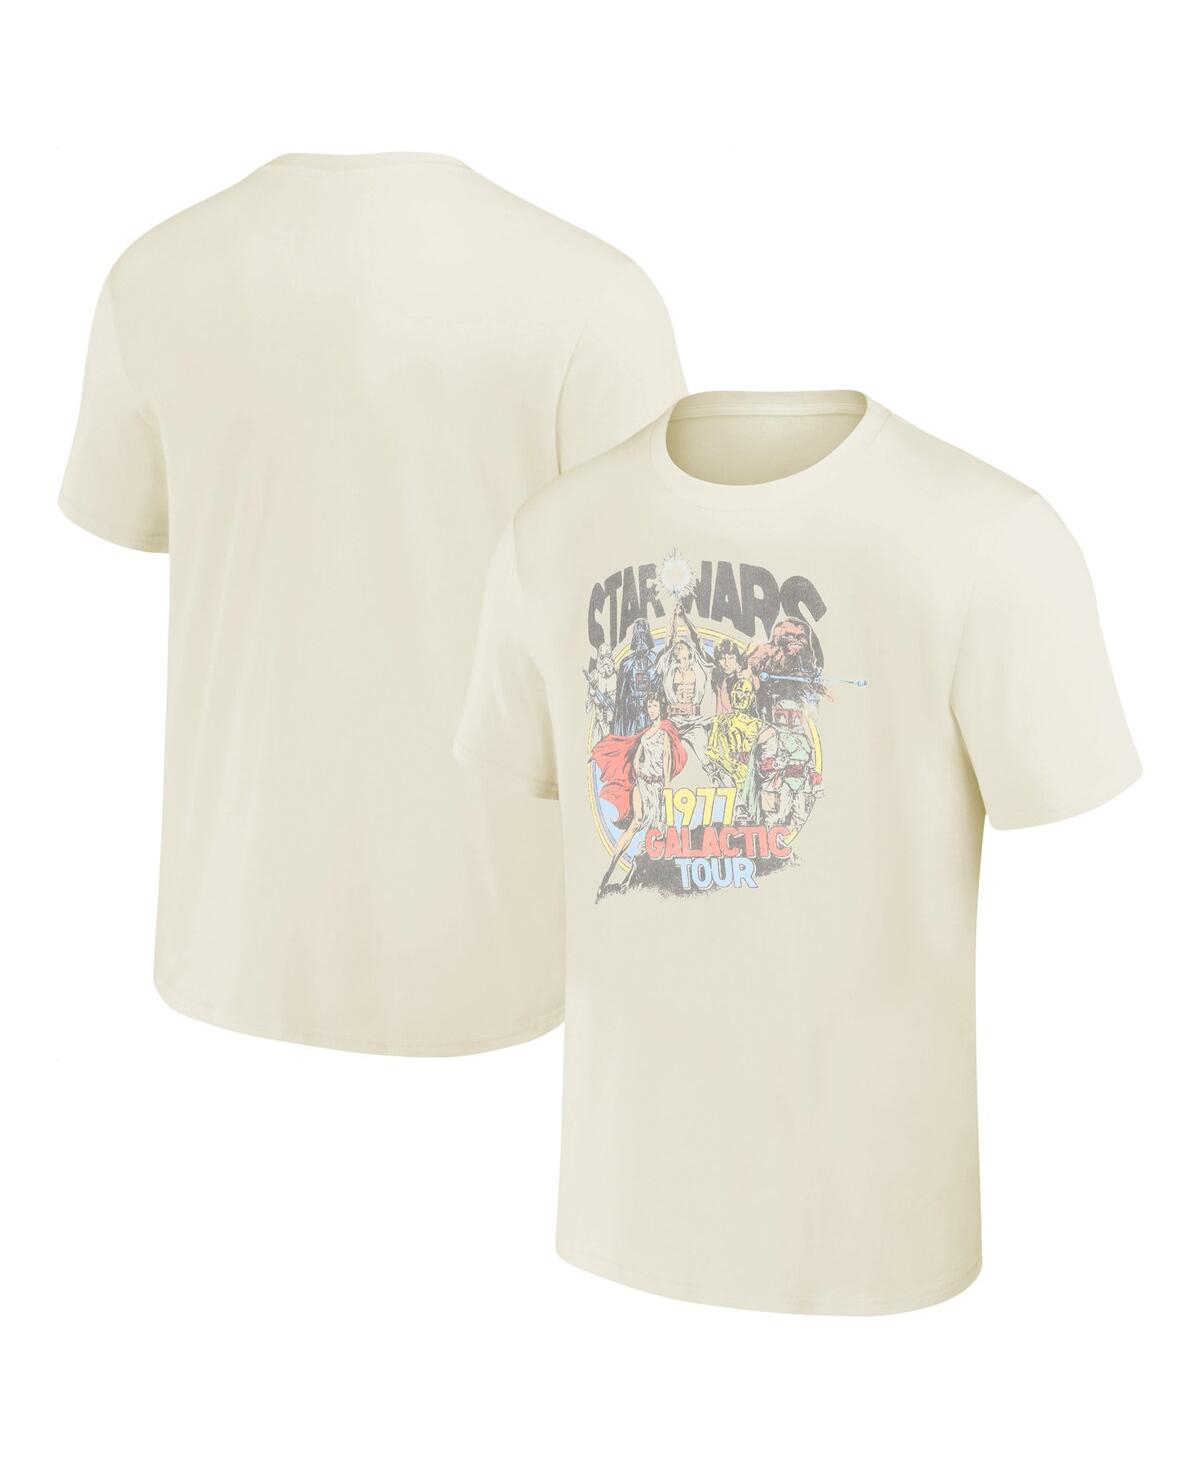 Men's and Women's Cream Distressed Star Wars Soft Vintage-Like T-shirt - Cream